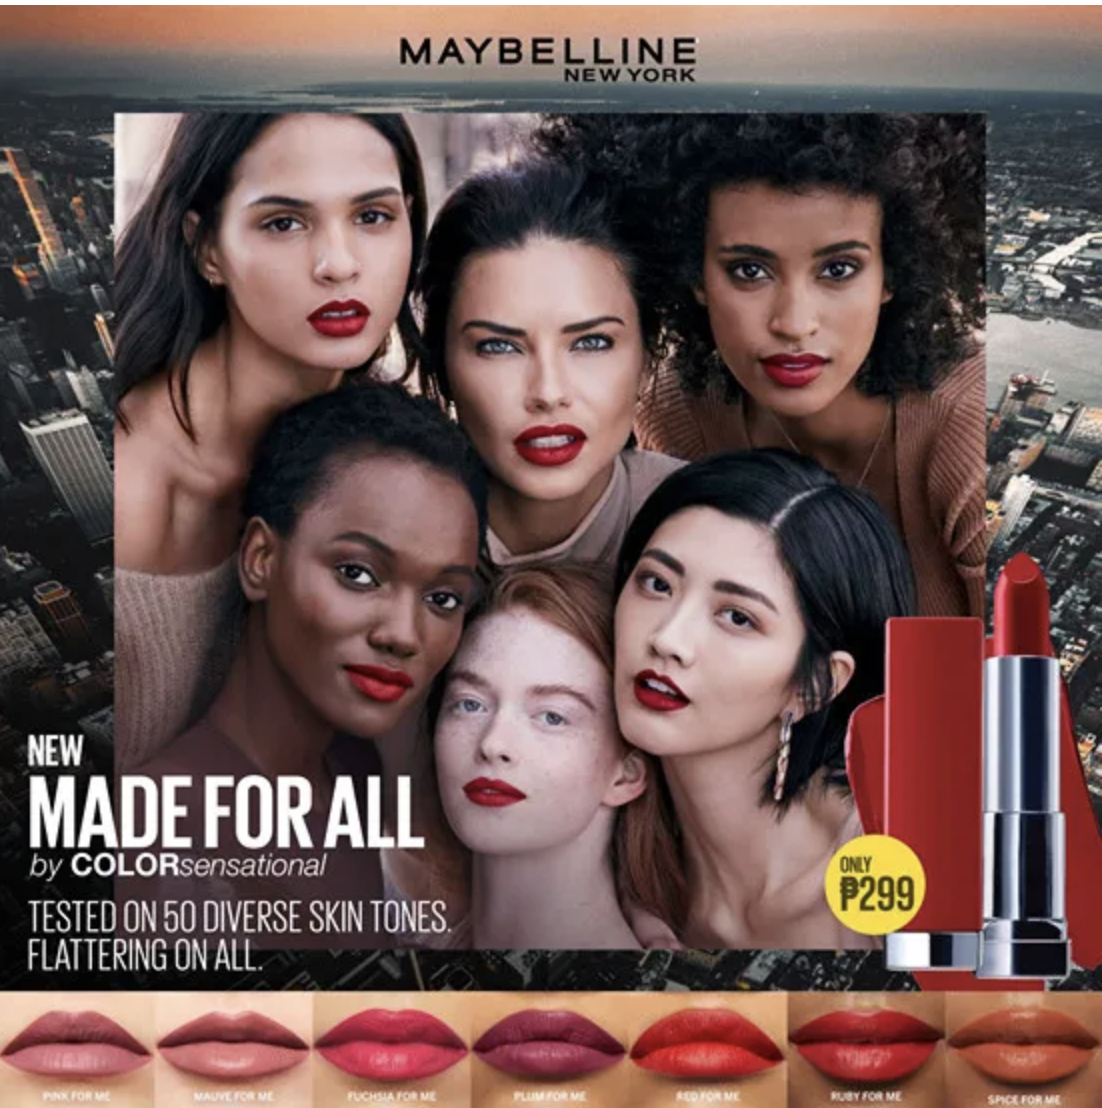 Maybelline's brand identity